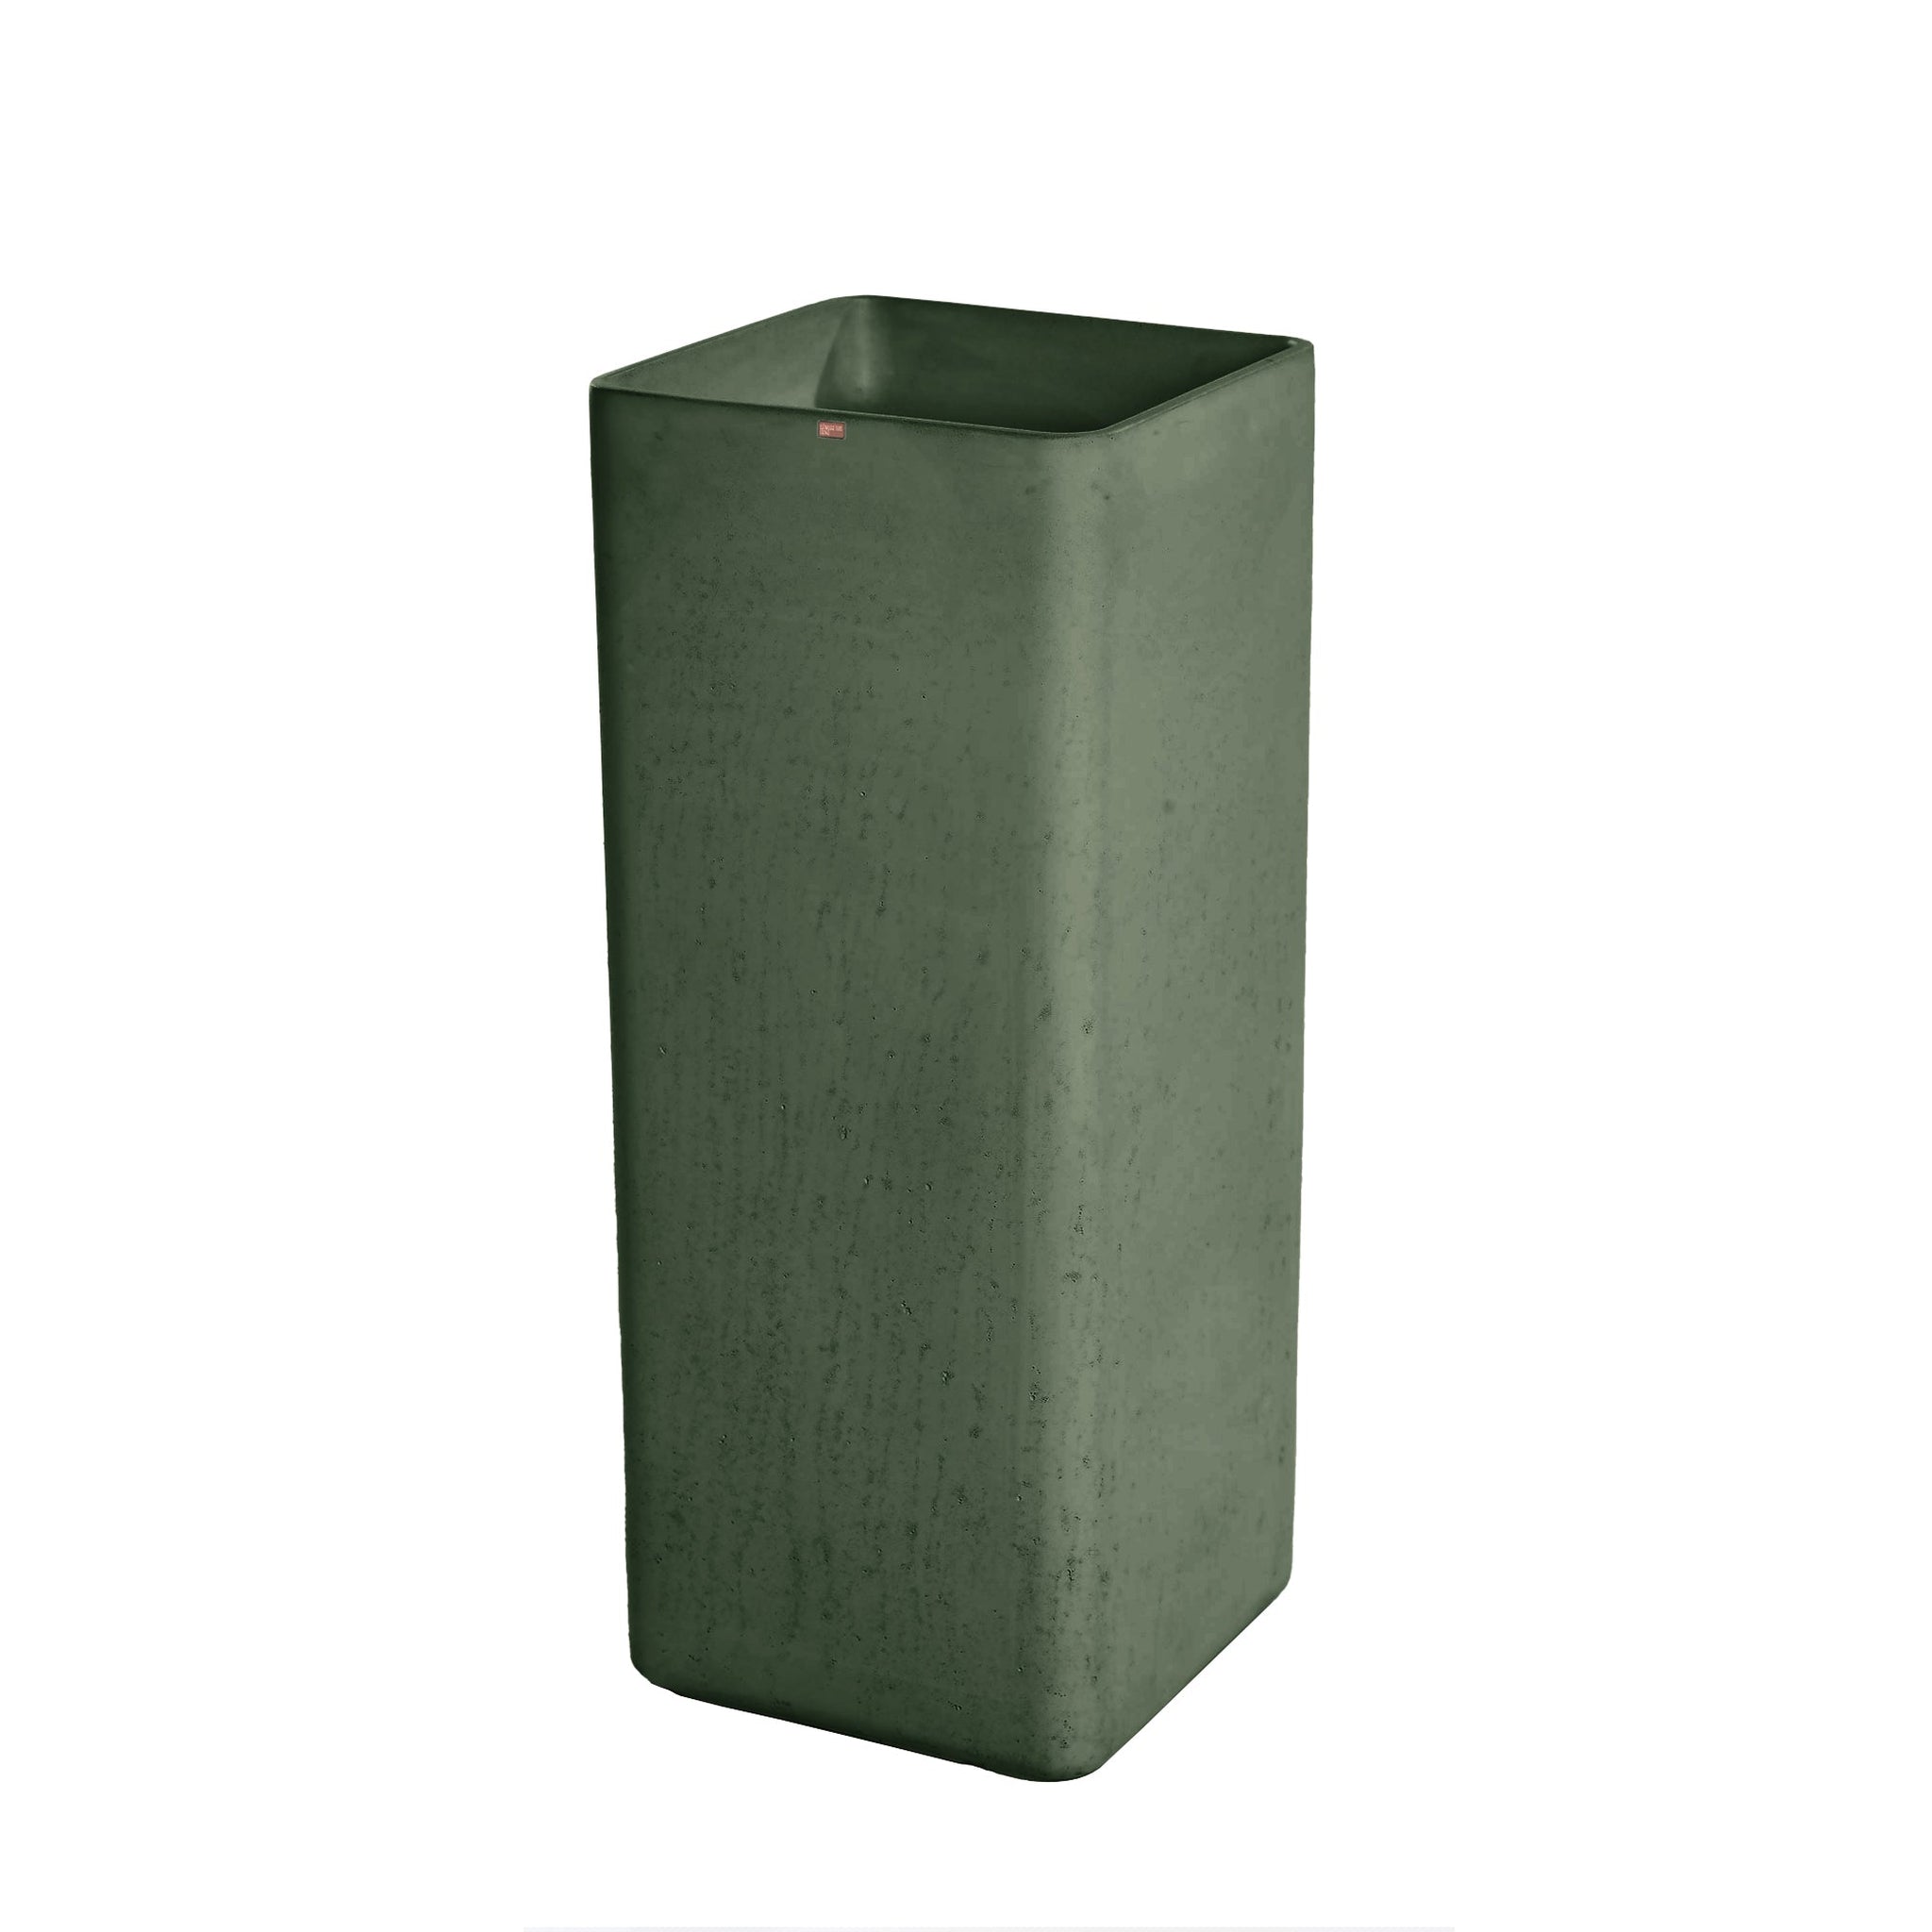 Konkretus, Konkretus Fladd06 15" Amazonic Green Square Pedestal Concrete Bathroom Sink